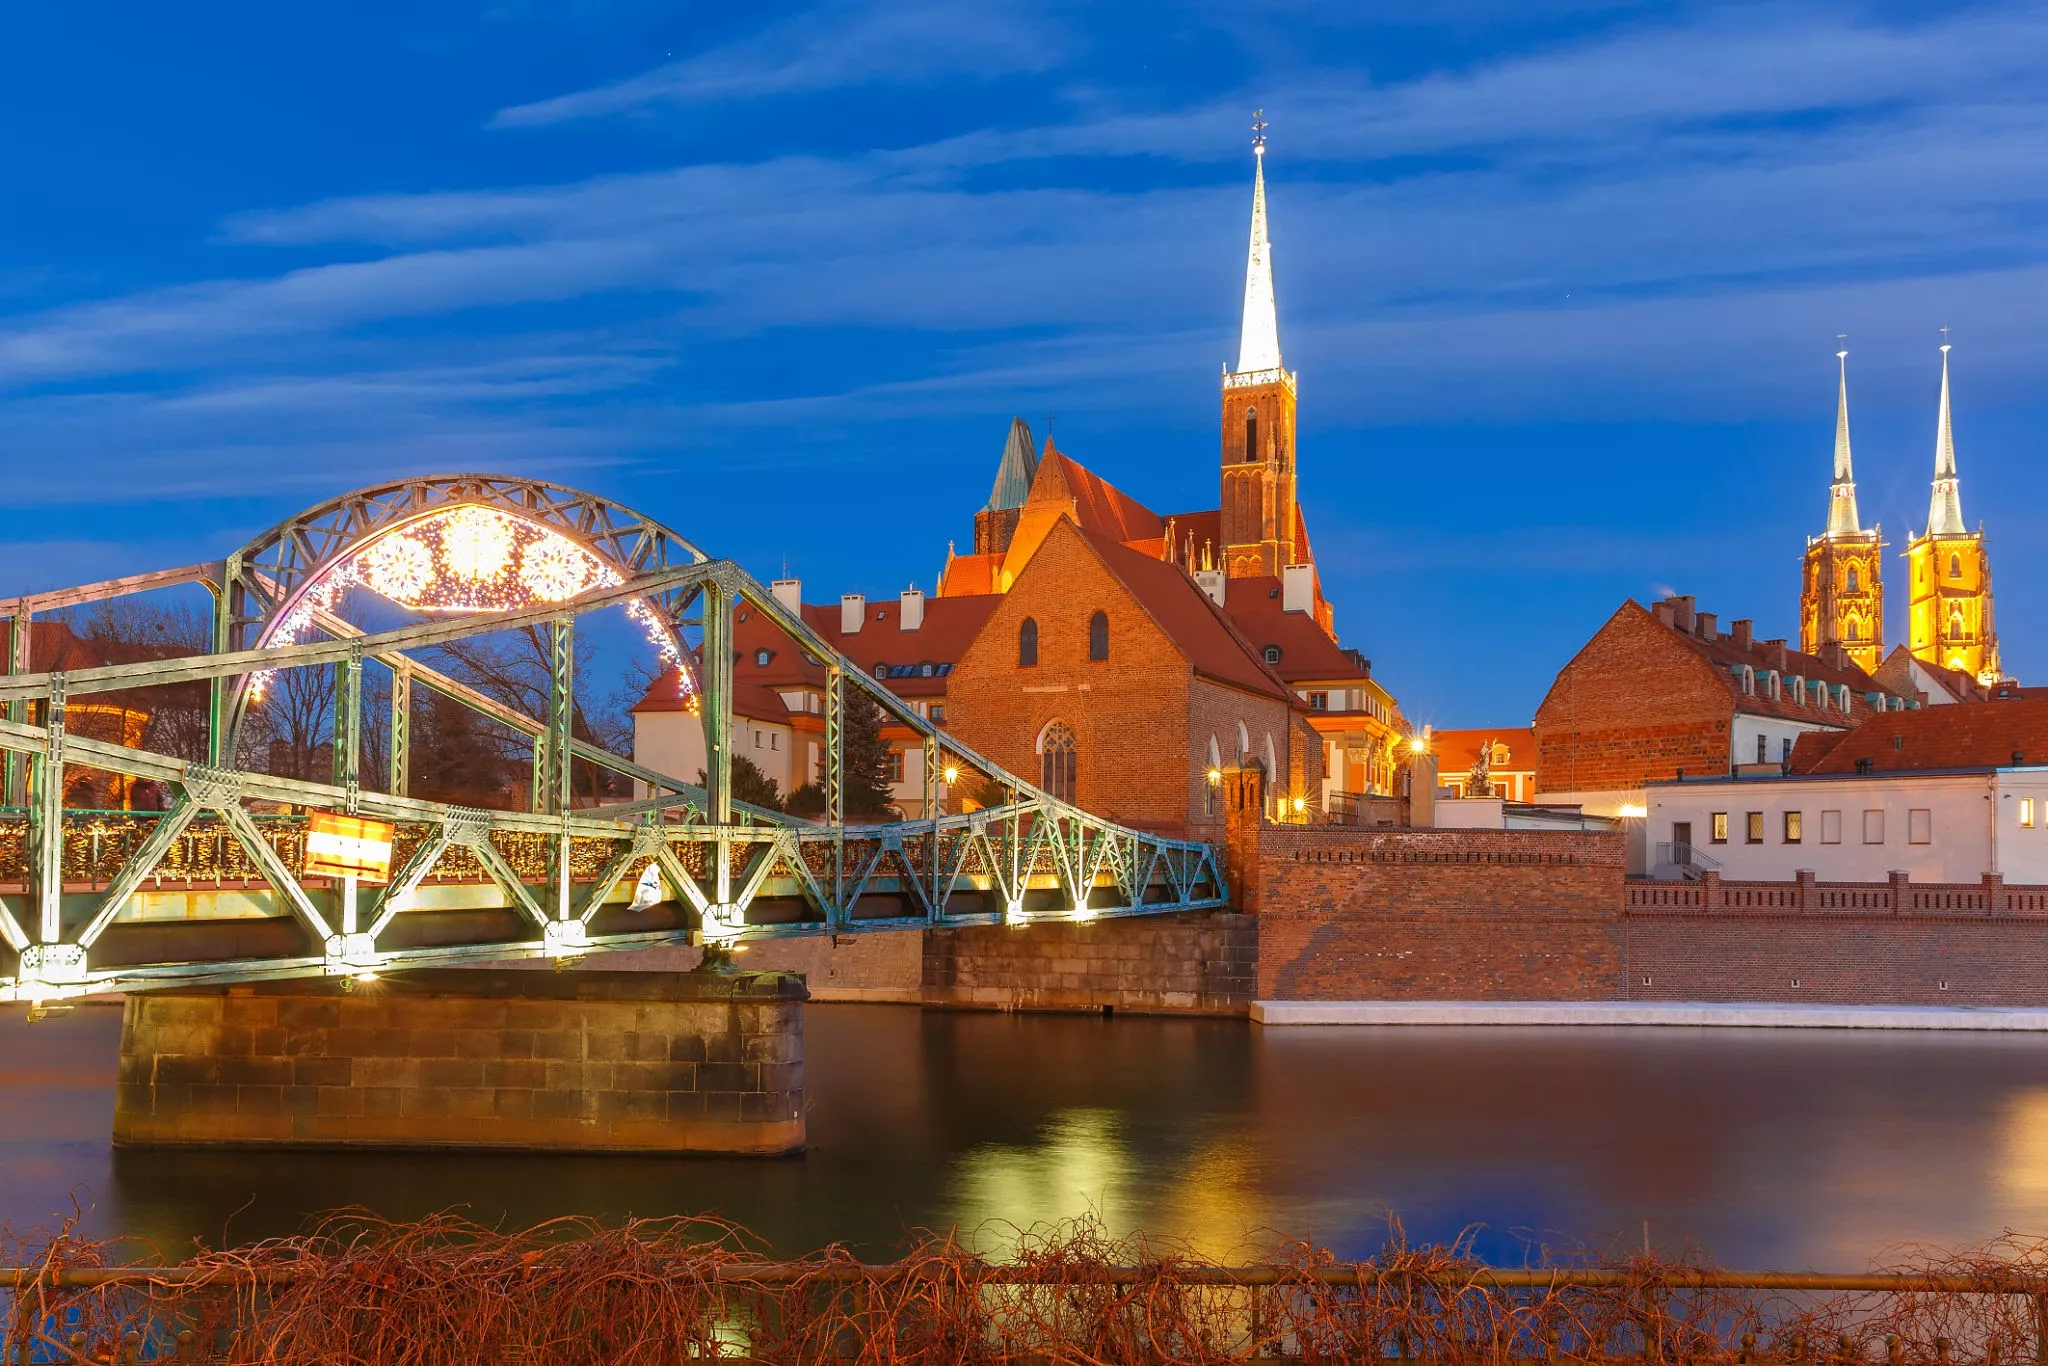 Tumskiy Bridge in Poland, Europe | Architecture - Rated 4